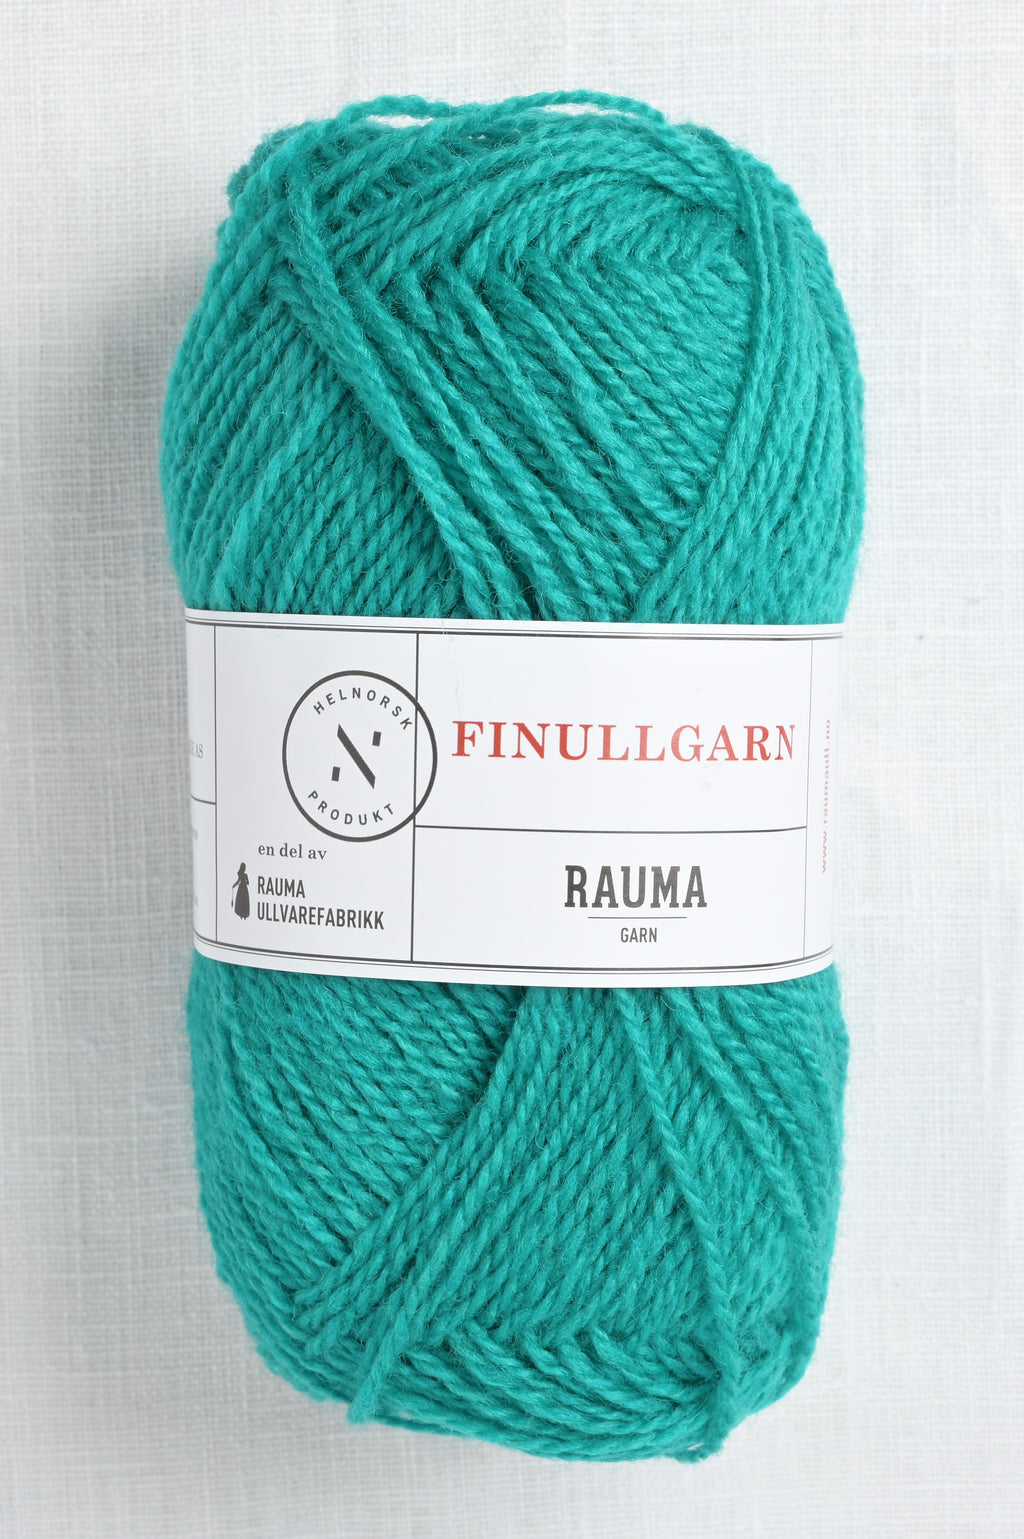 Rauma Finullgarn 4186 Bright Teal